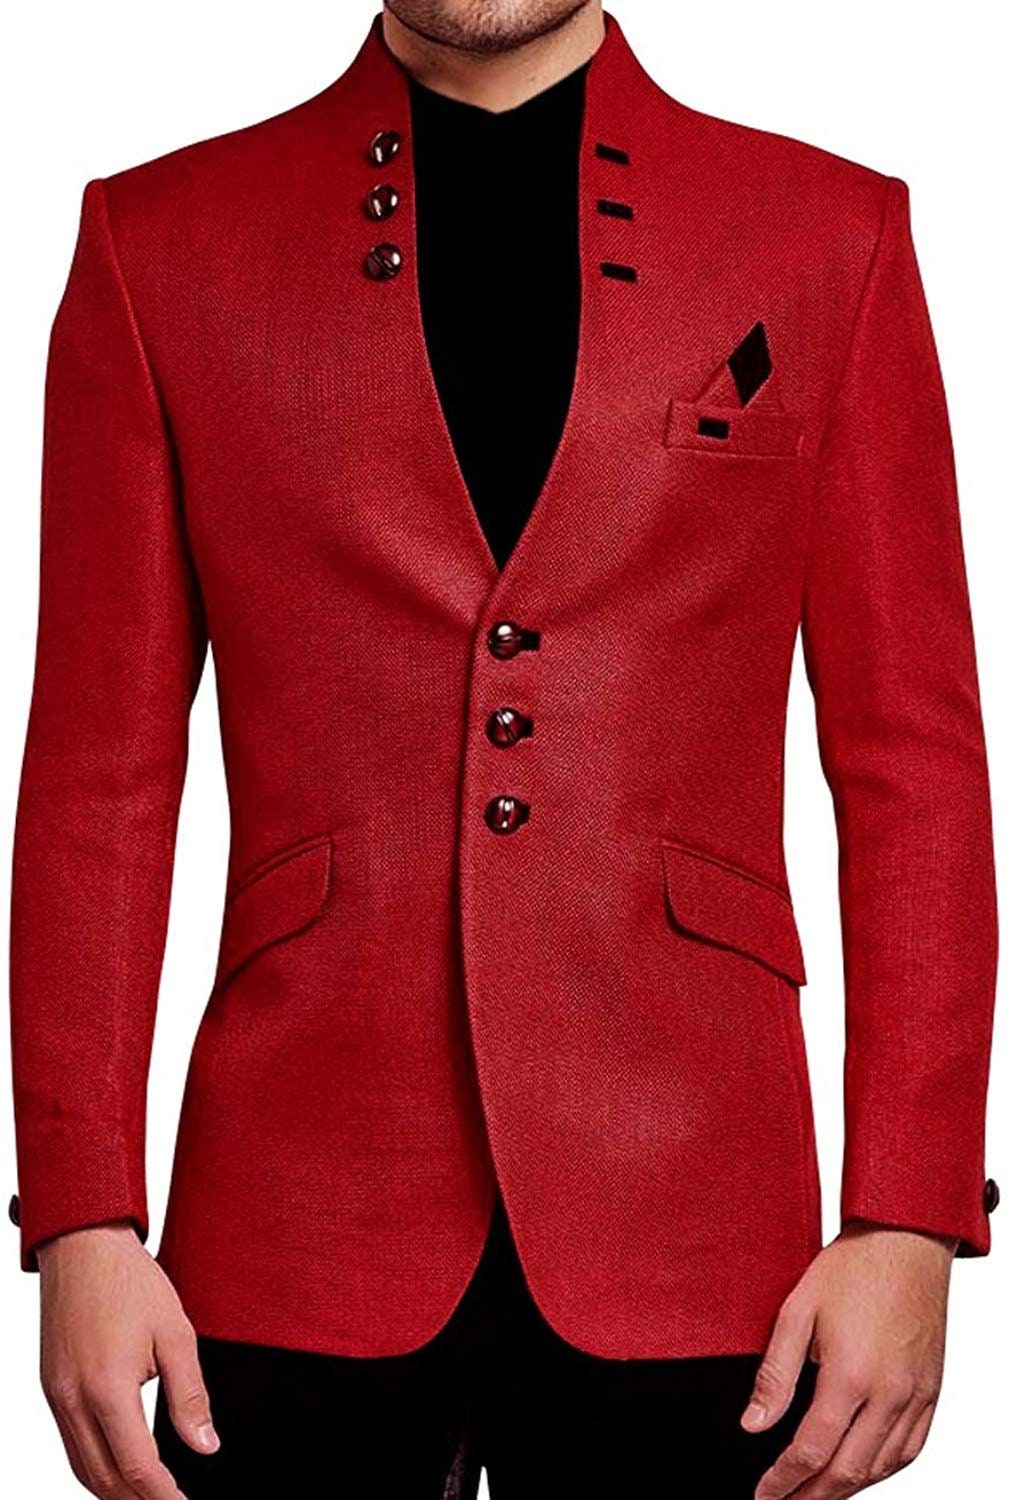 GANT Purple Red Color 100% Wool Slim Fit Suit Blazer Jacket Size EU 56  UK/US 46 | eBay